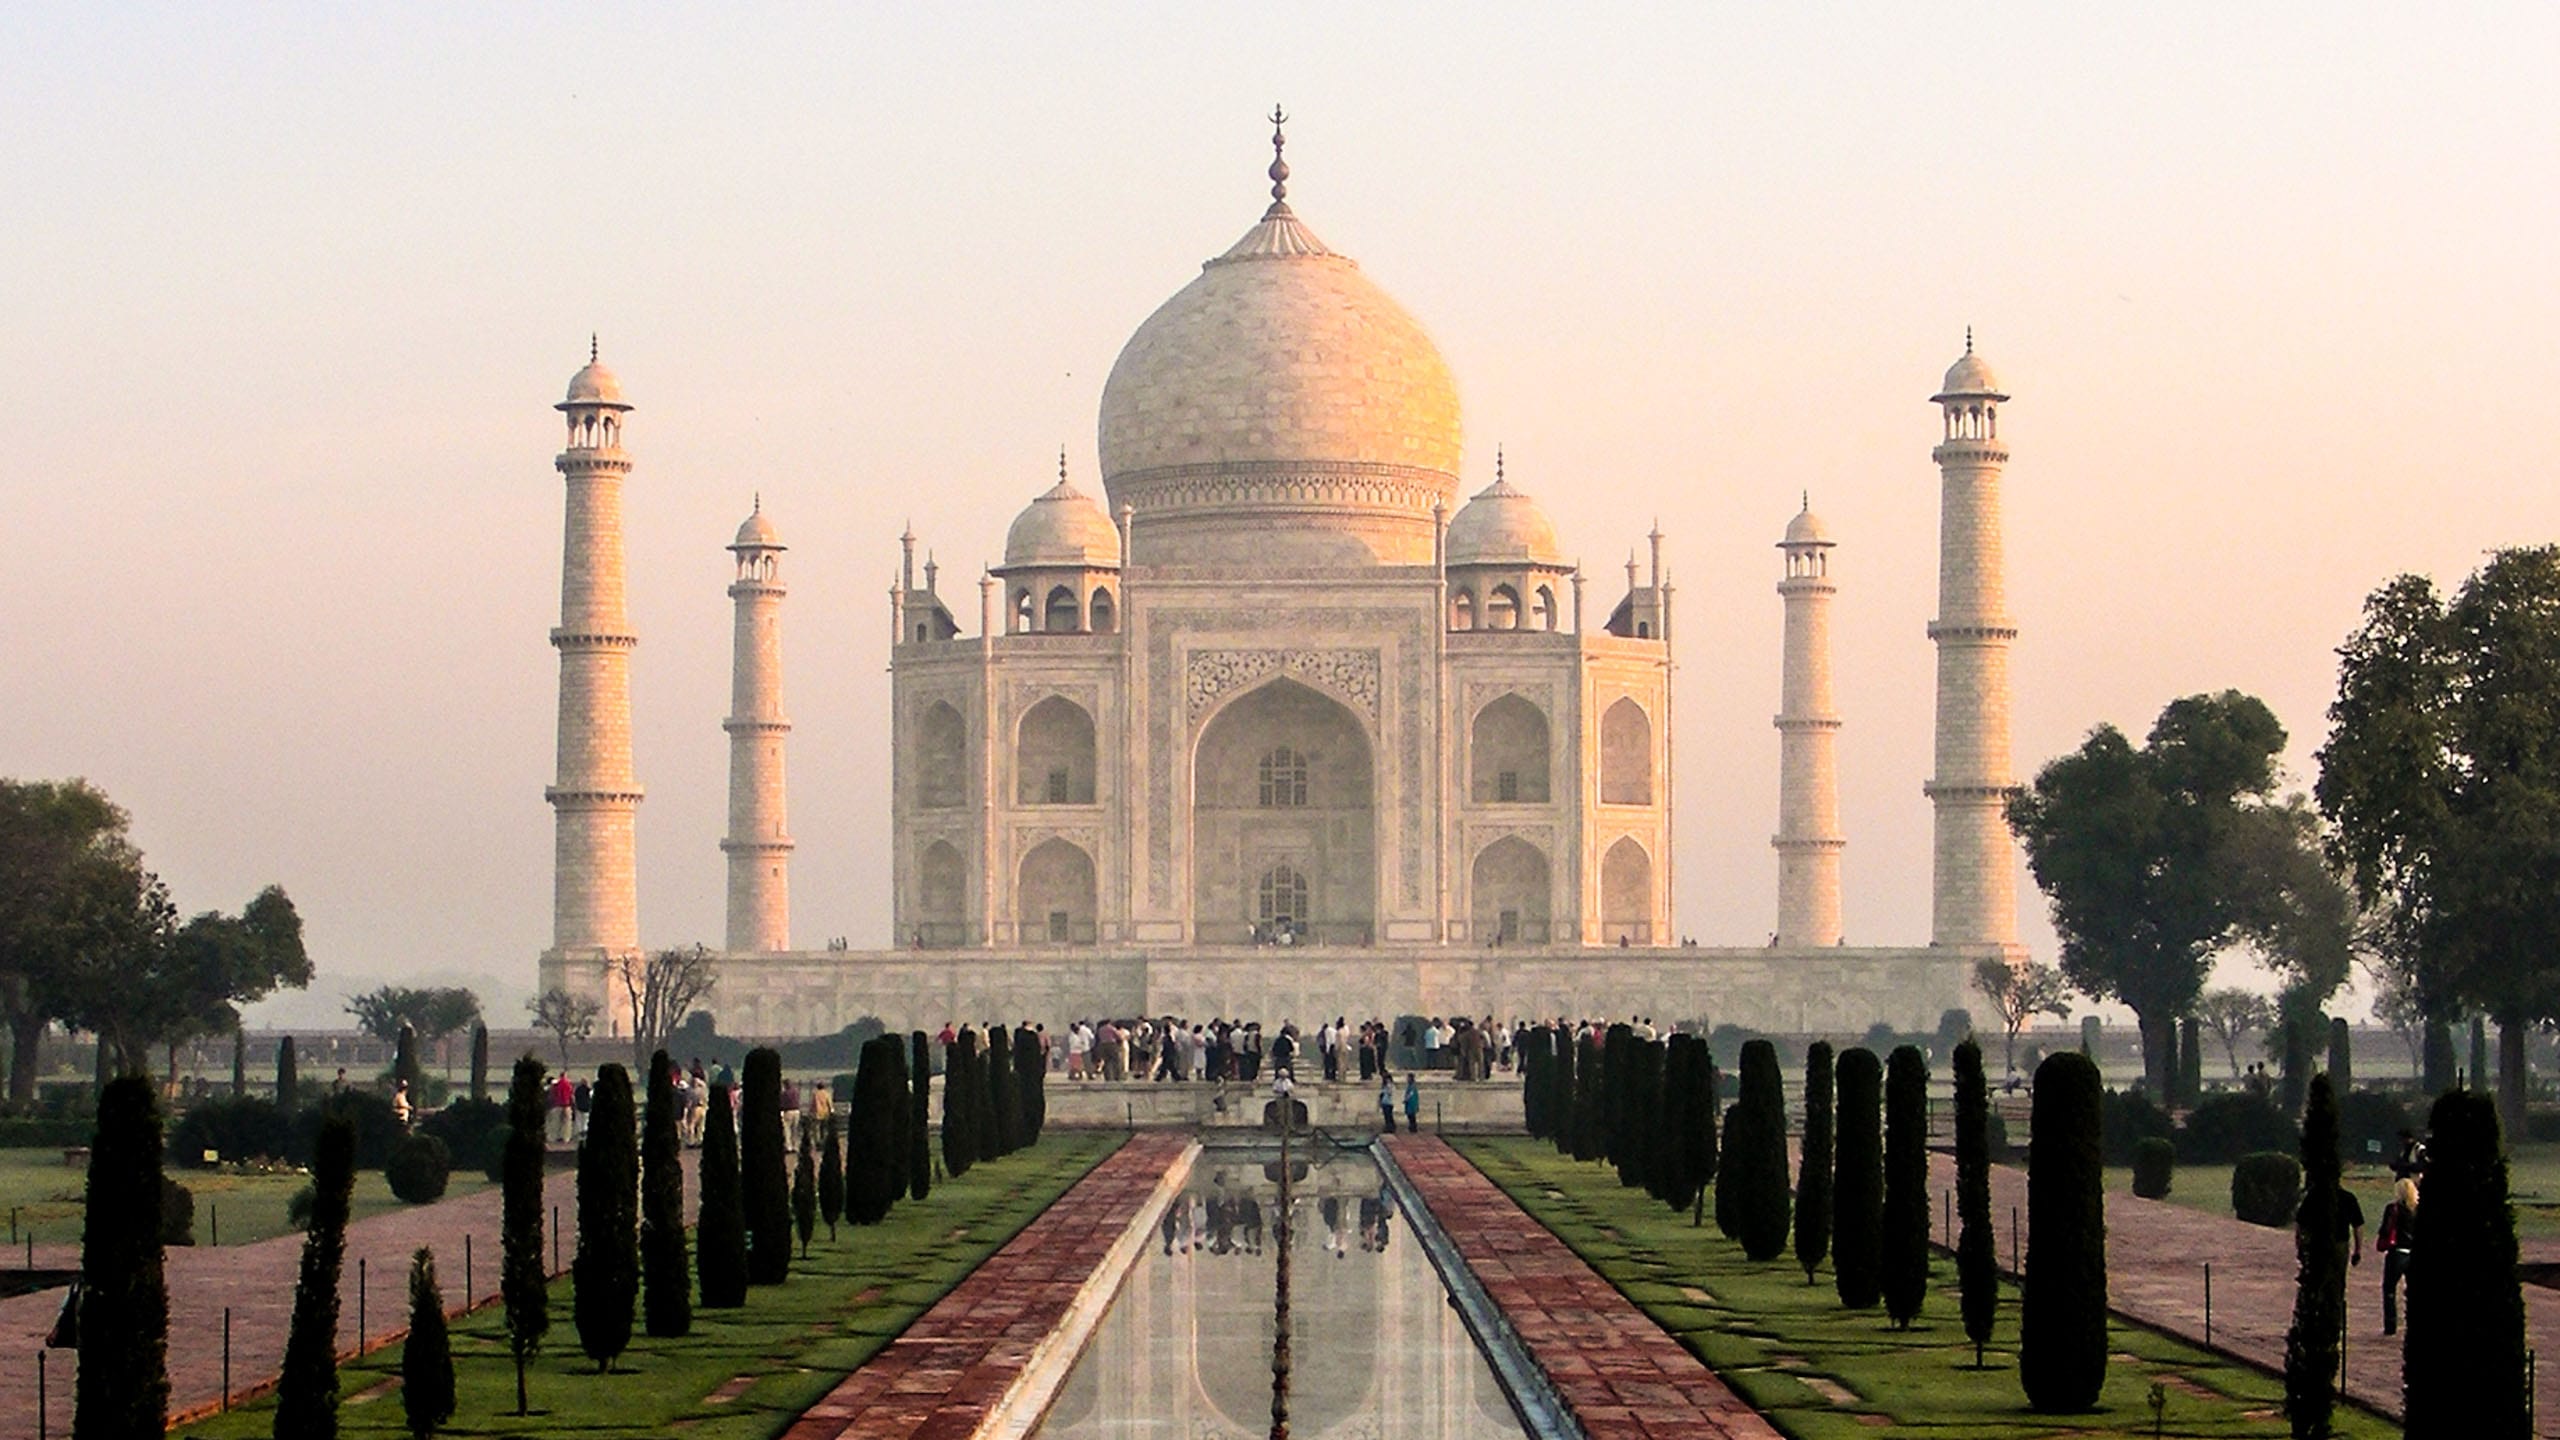 Wide view of the Taj Mahal